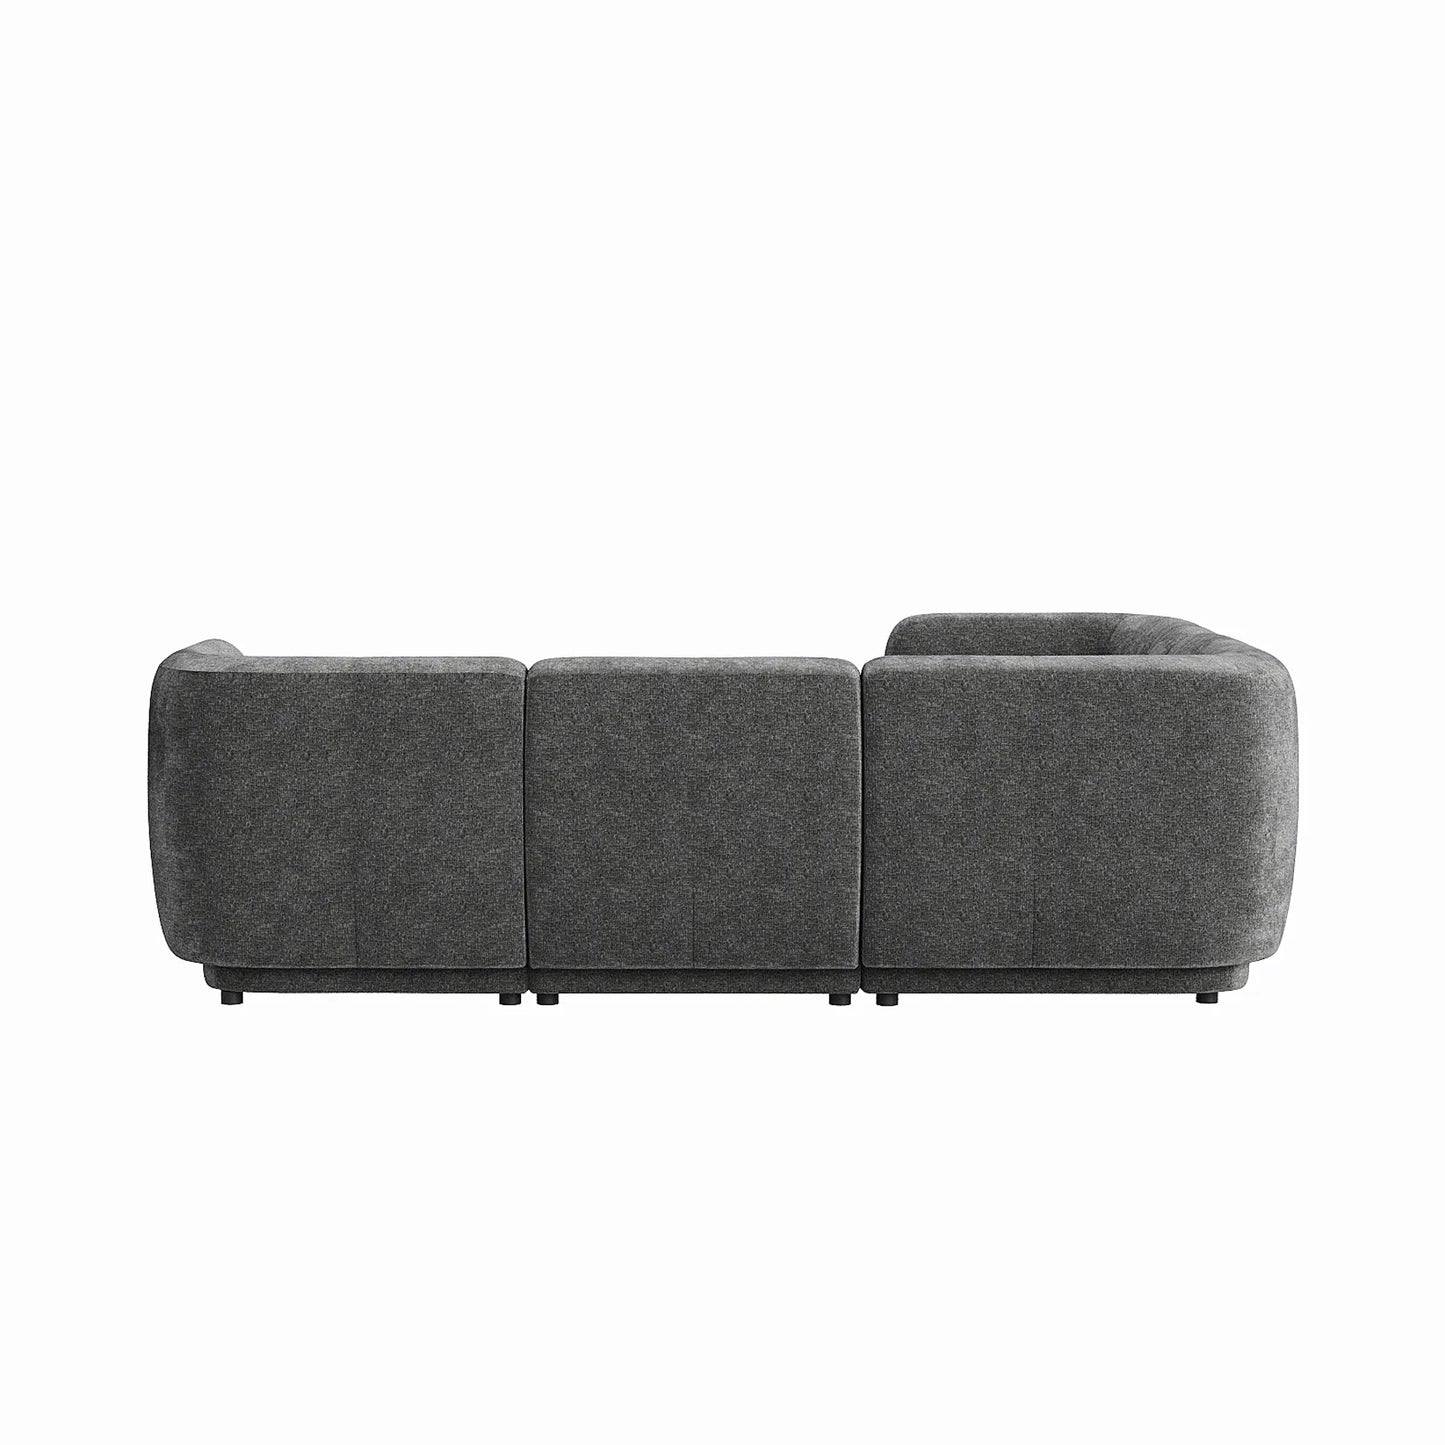 Plum LHF Chaise Sofa - City Grey